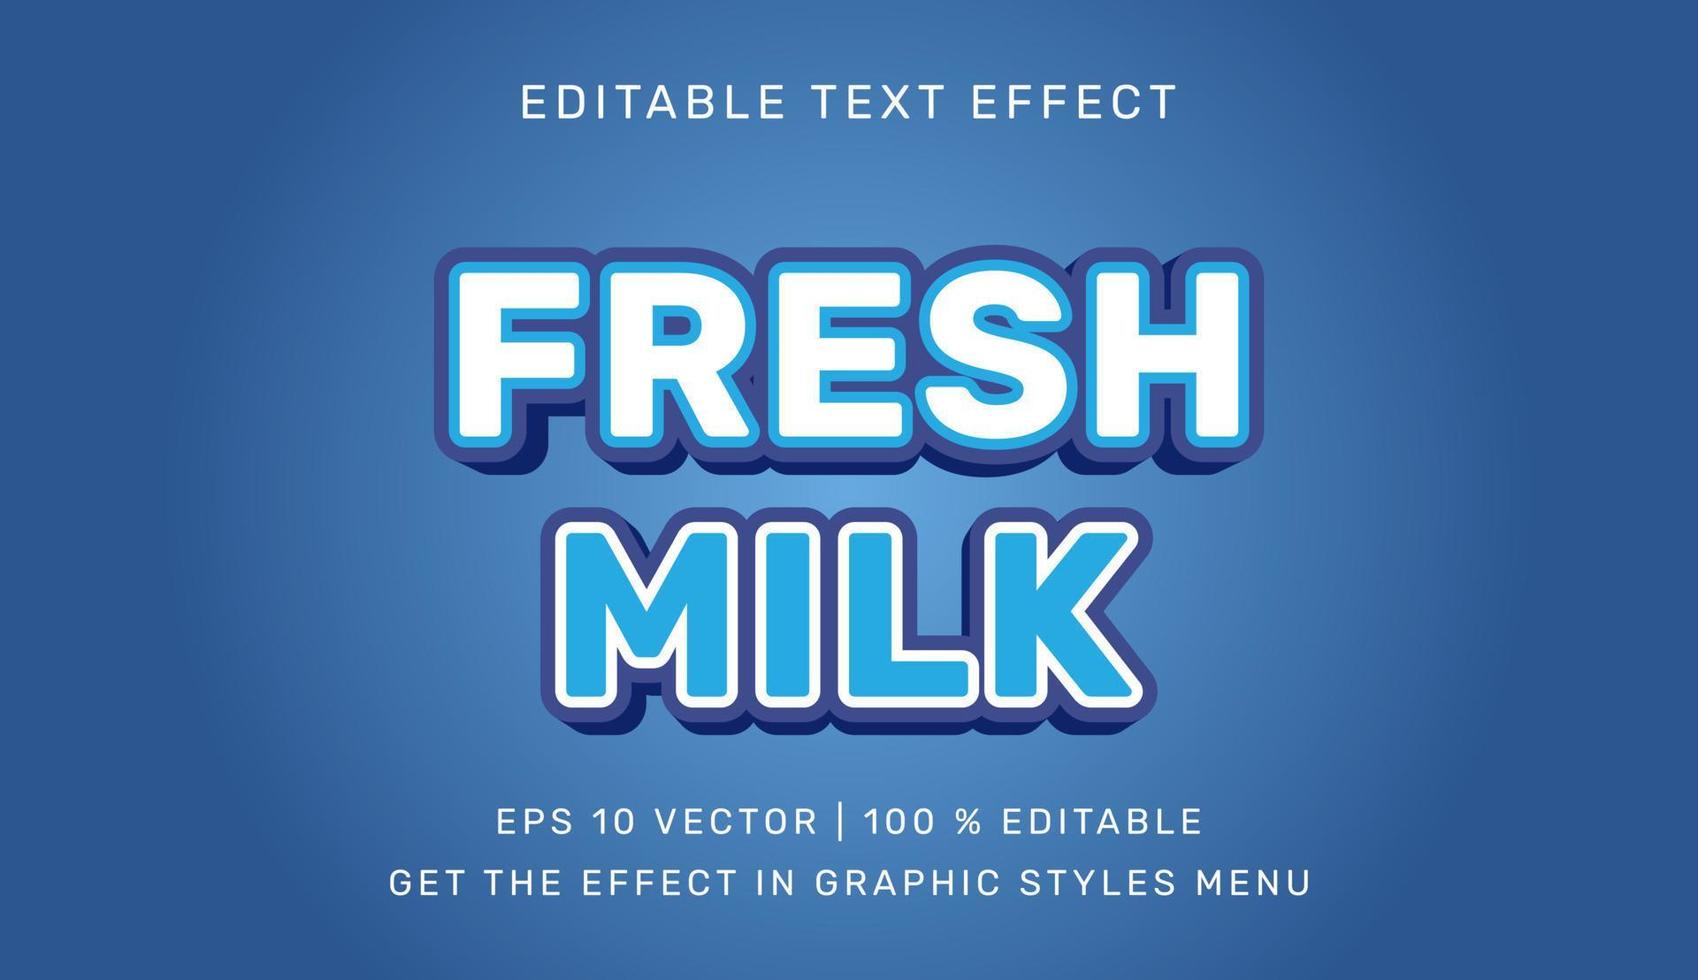 Vector illustration of Fresh milk 3d text effect template